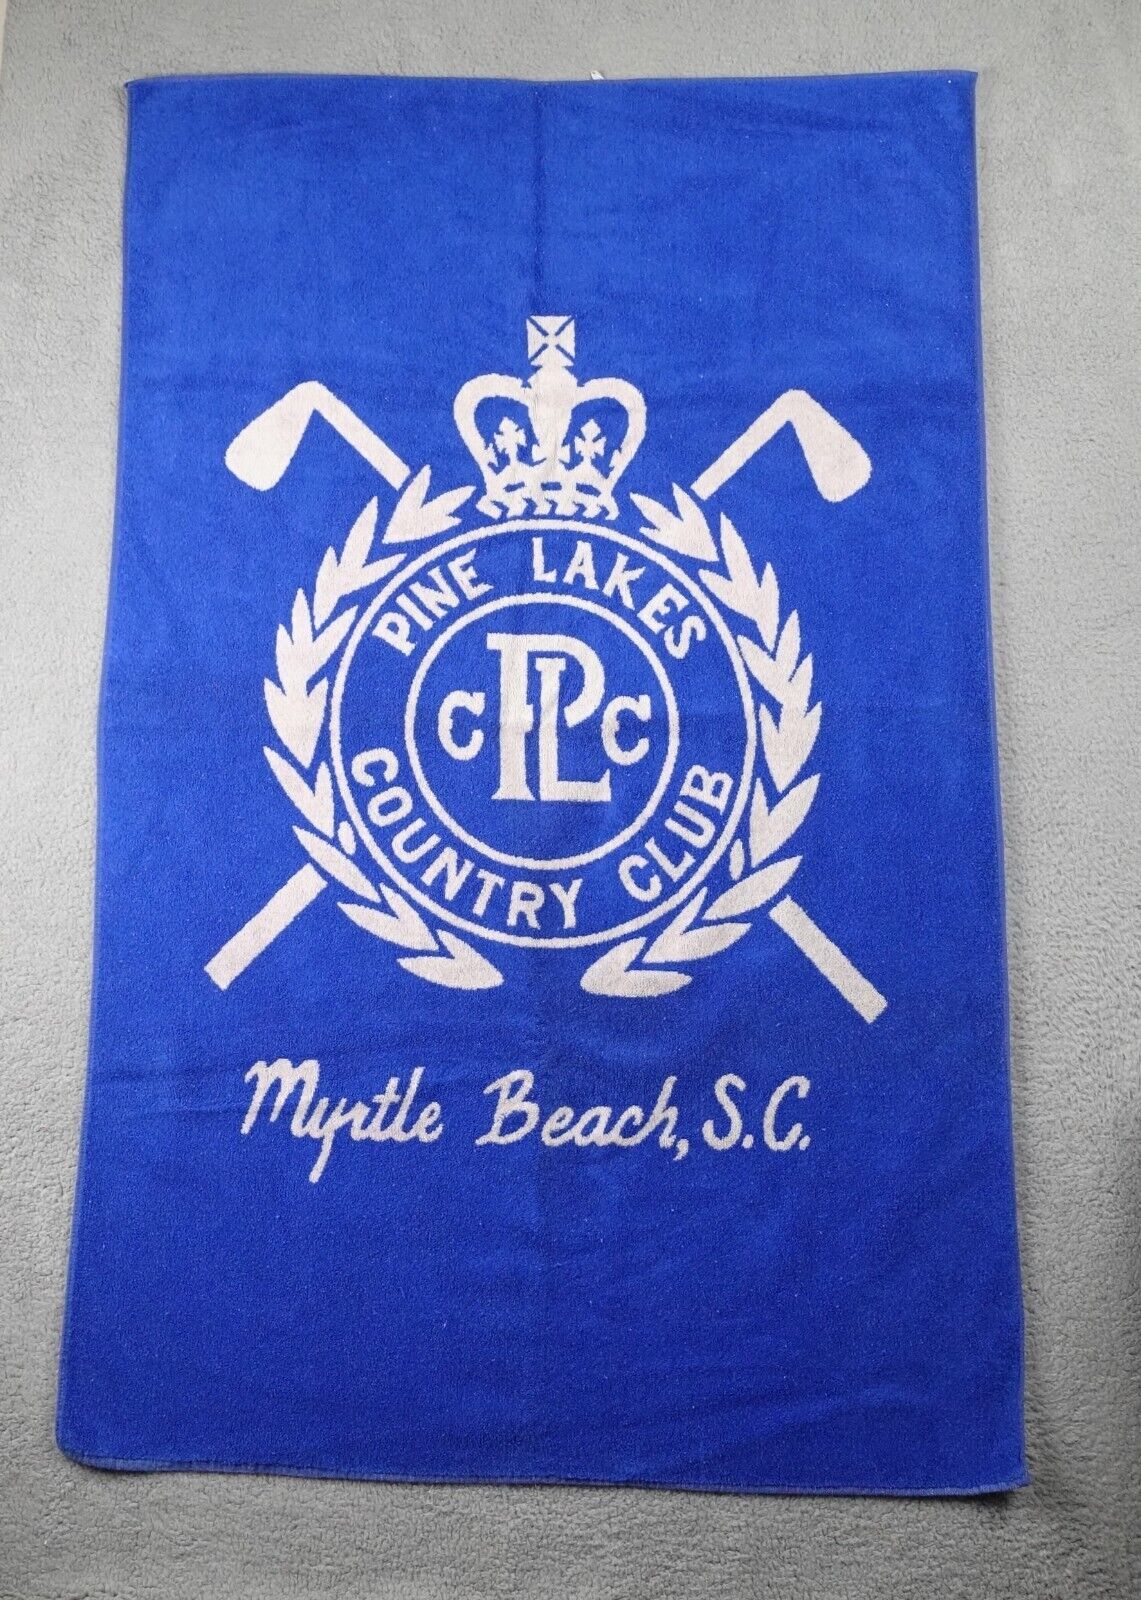 Vintage Pine Lakes Country Club Beach Towel Myrtle Beach Golf Blue Cotton 35x55